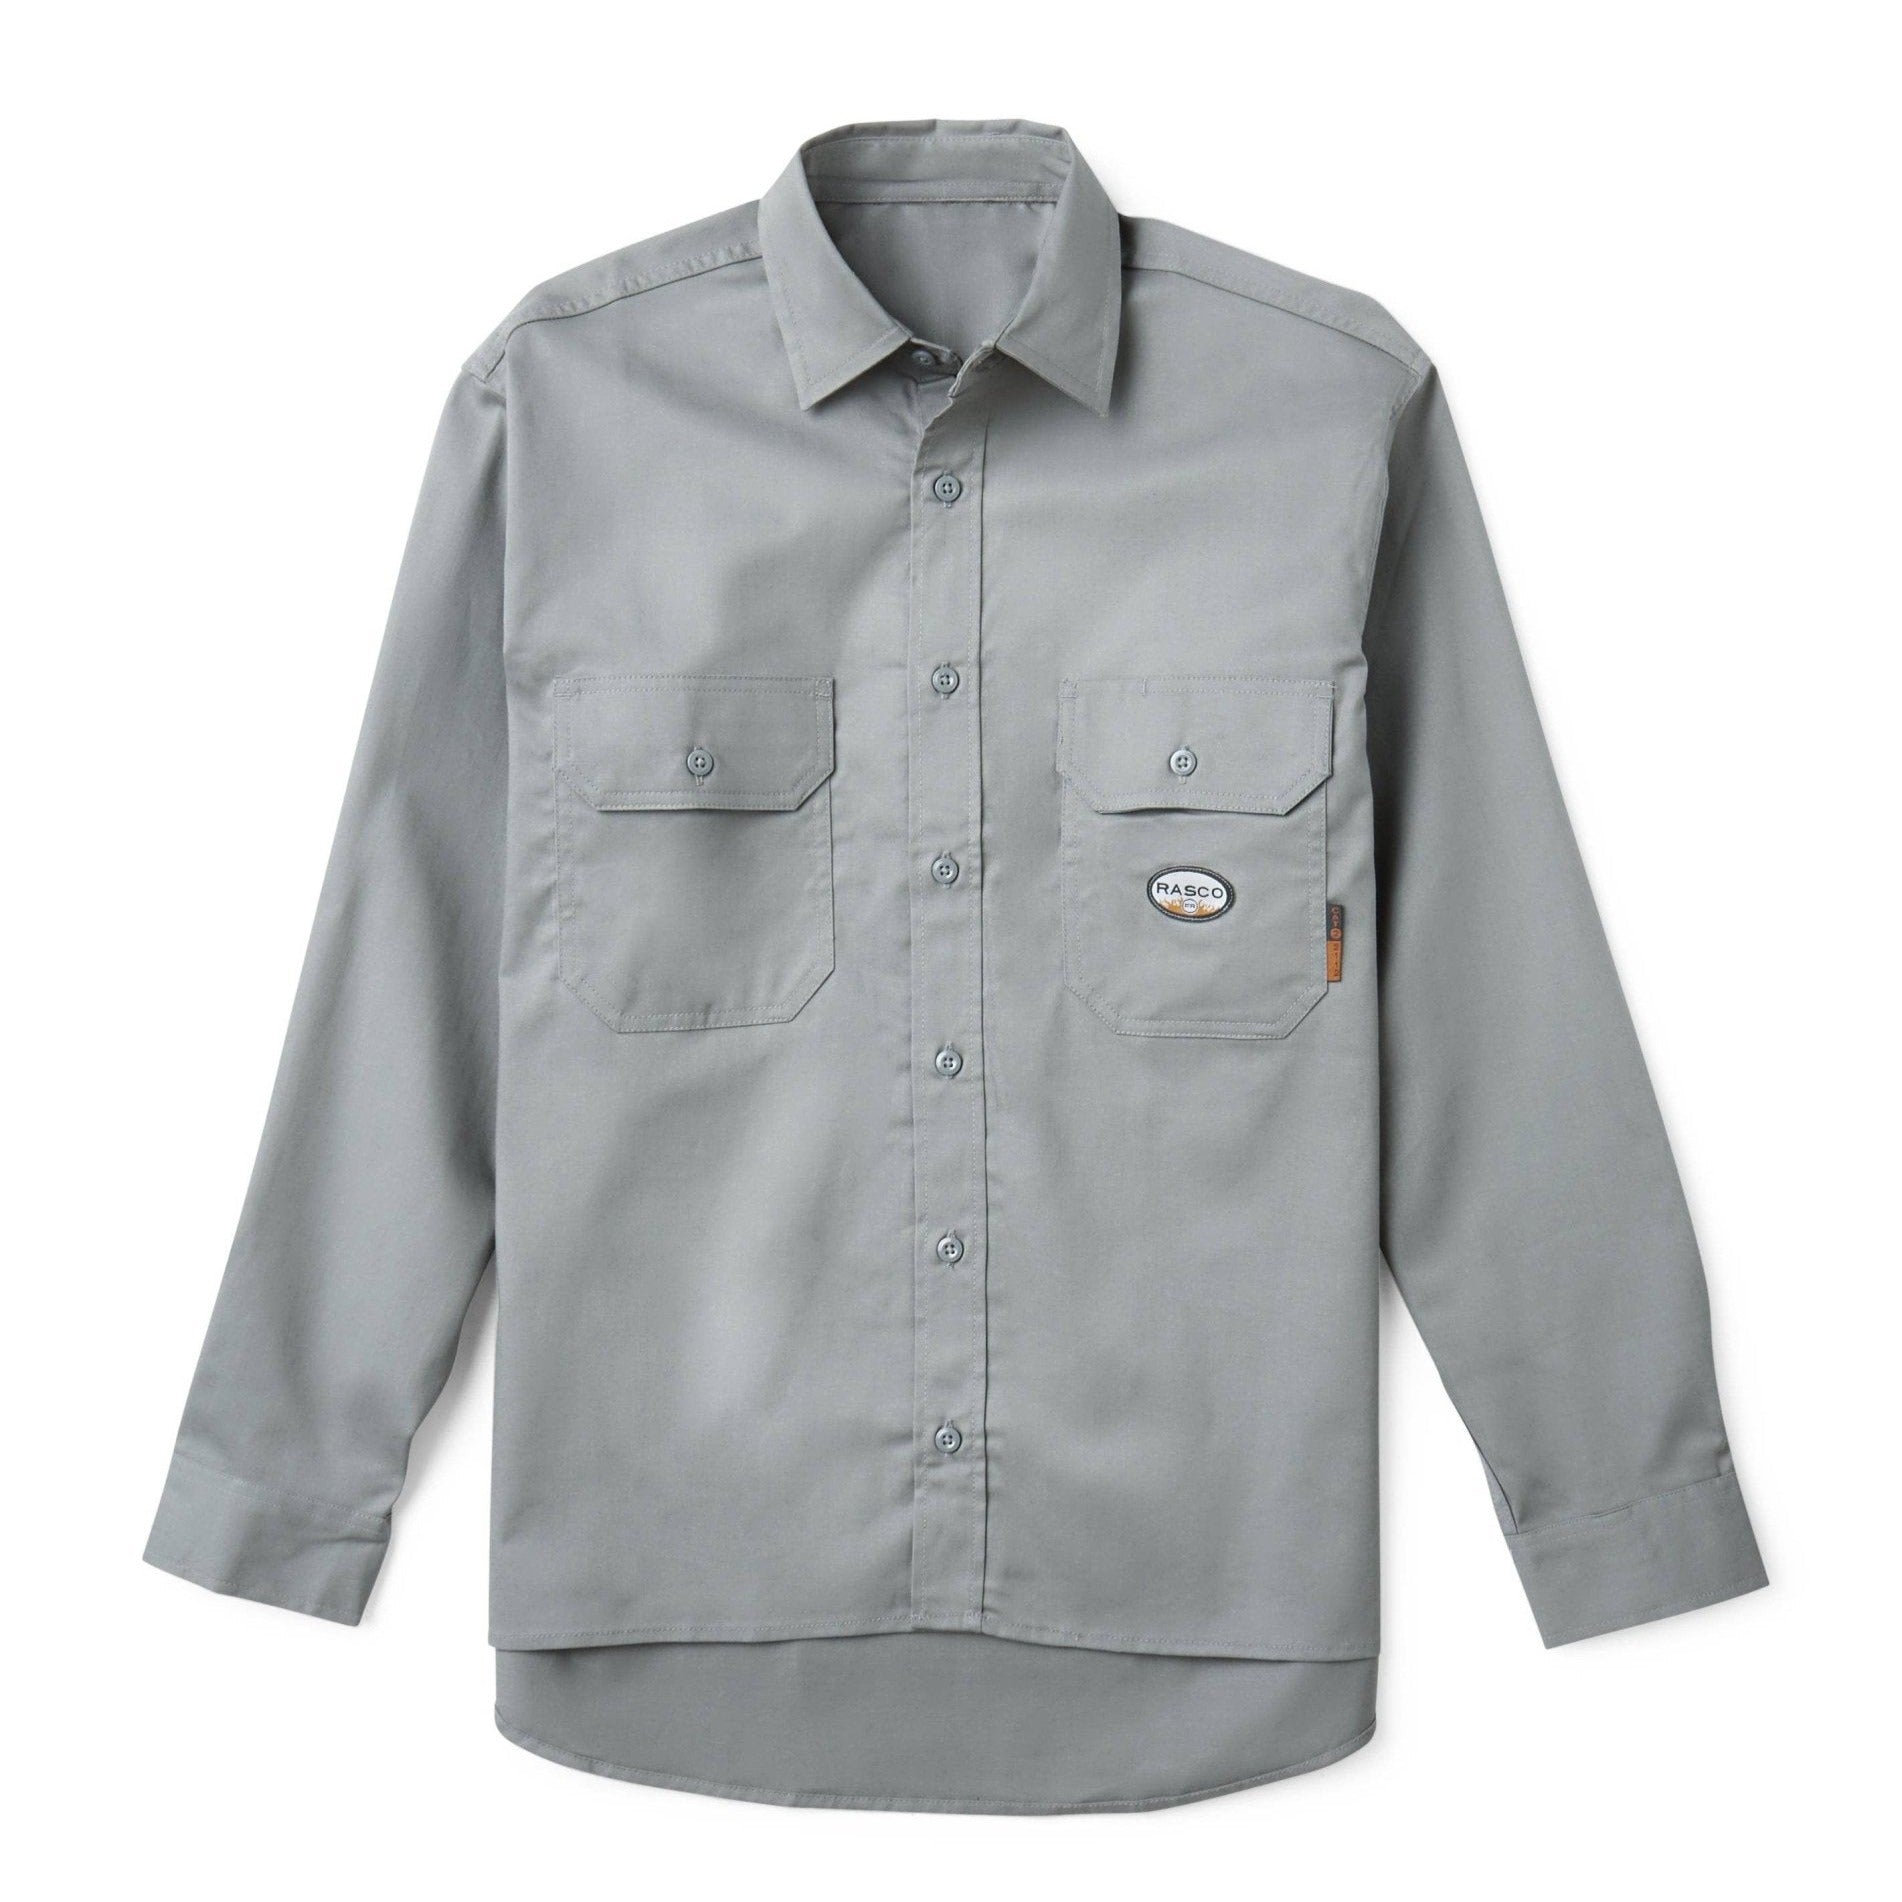 FR 88/12 Men's Uniform Shirt - Rasco FR